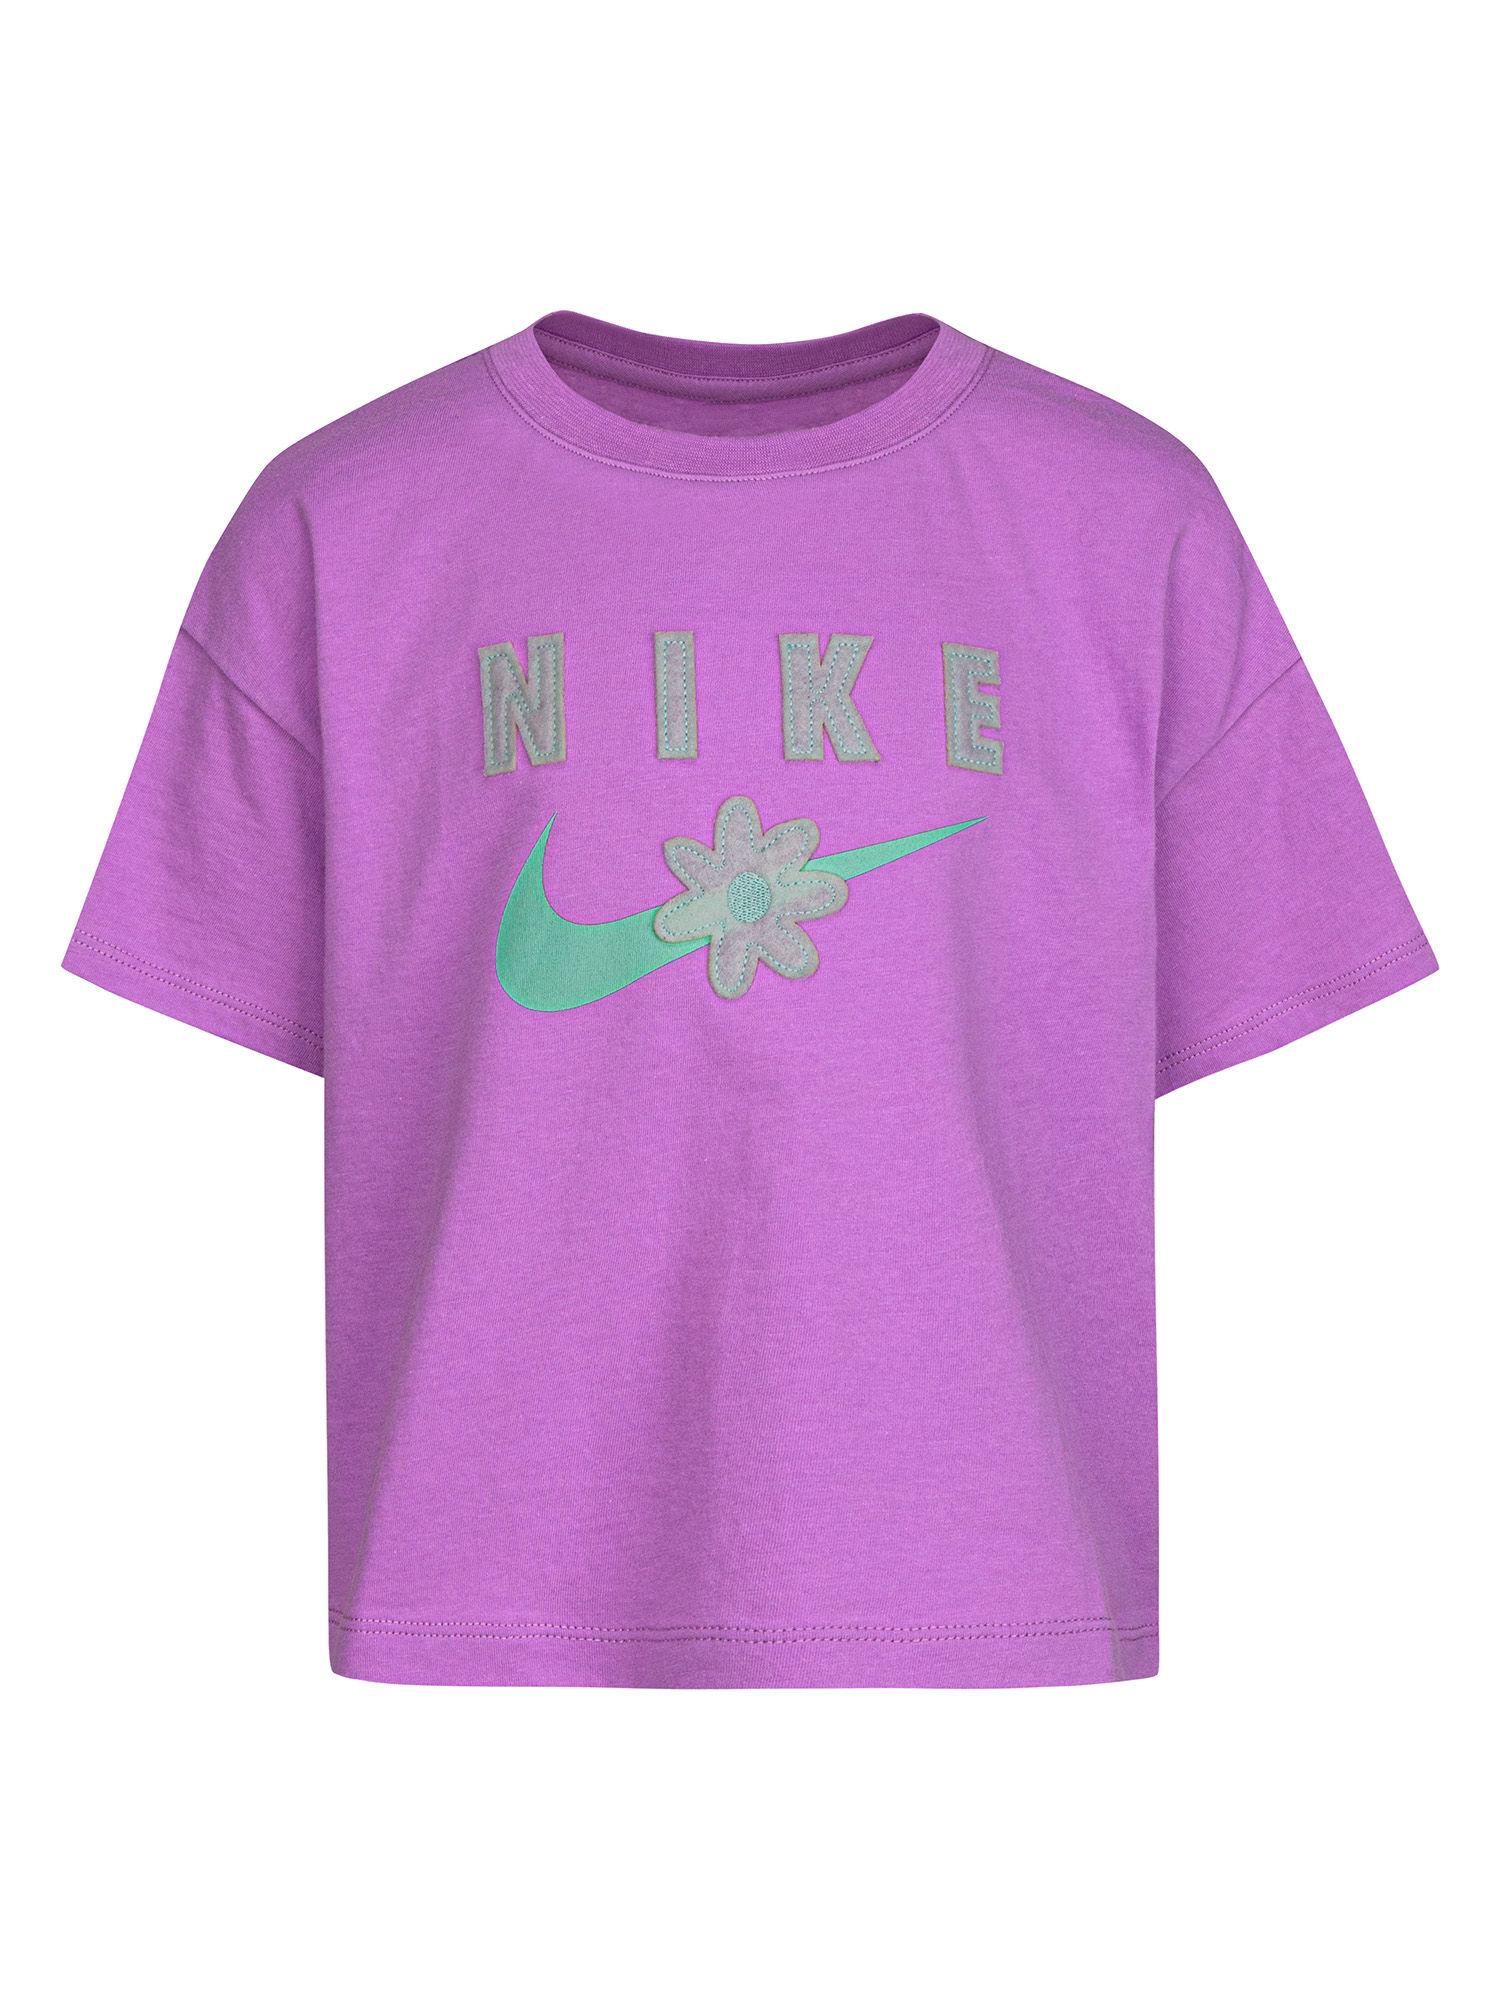 Girls Purple Graphic T-shirts